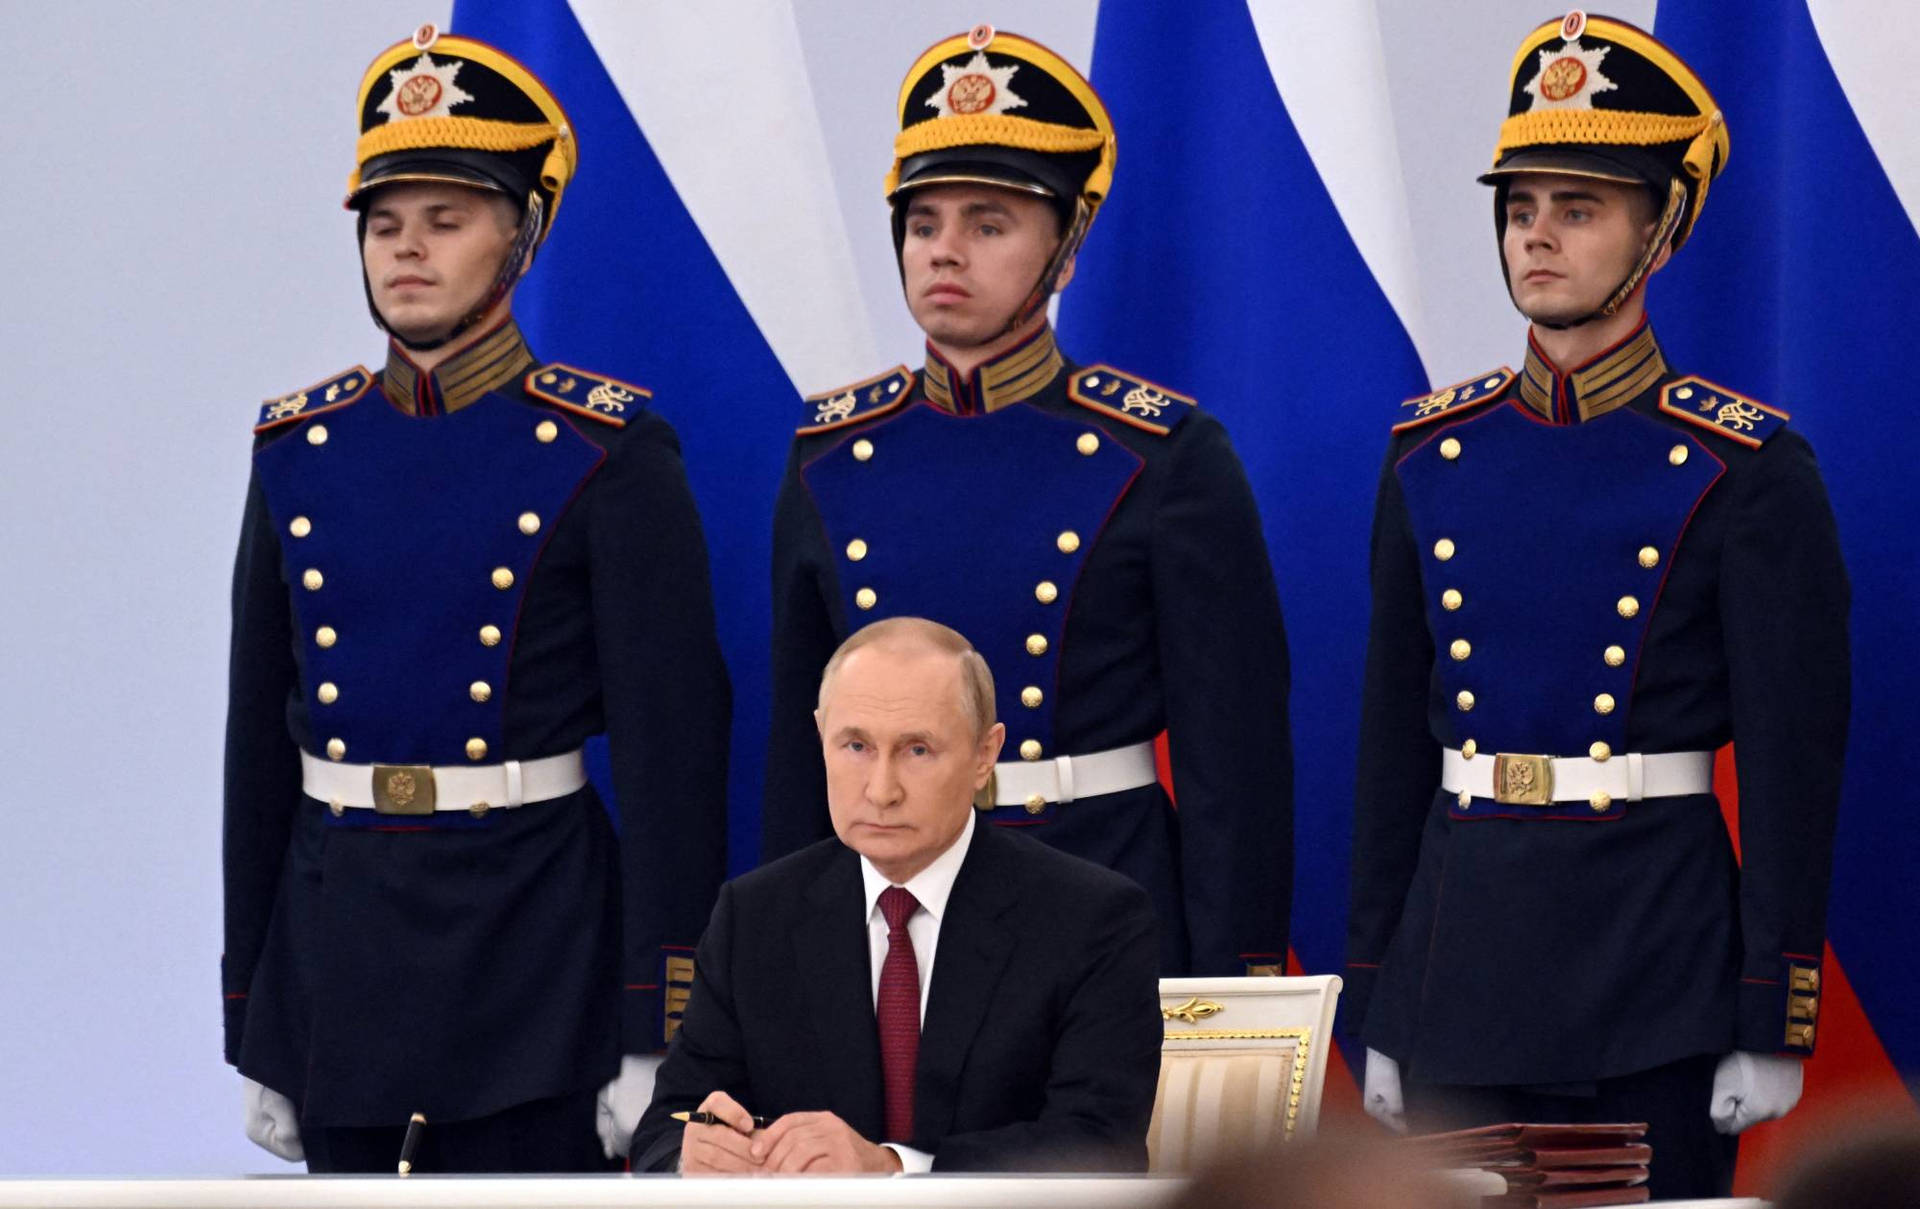 Vladimir Putin With Three Guards Wallpaper